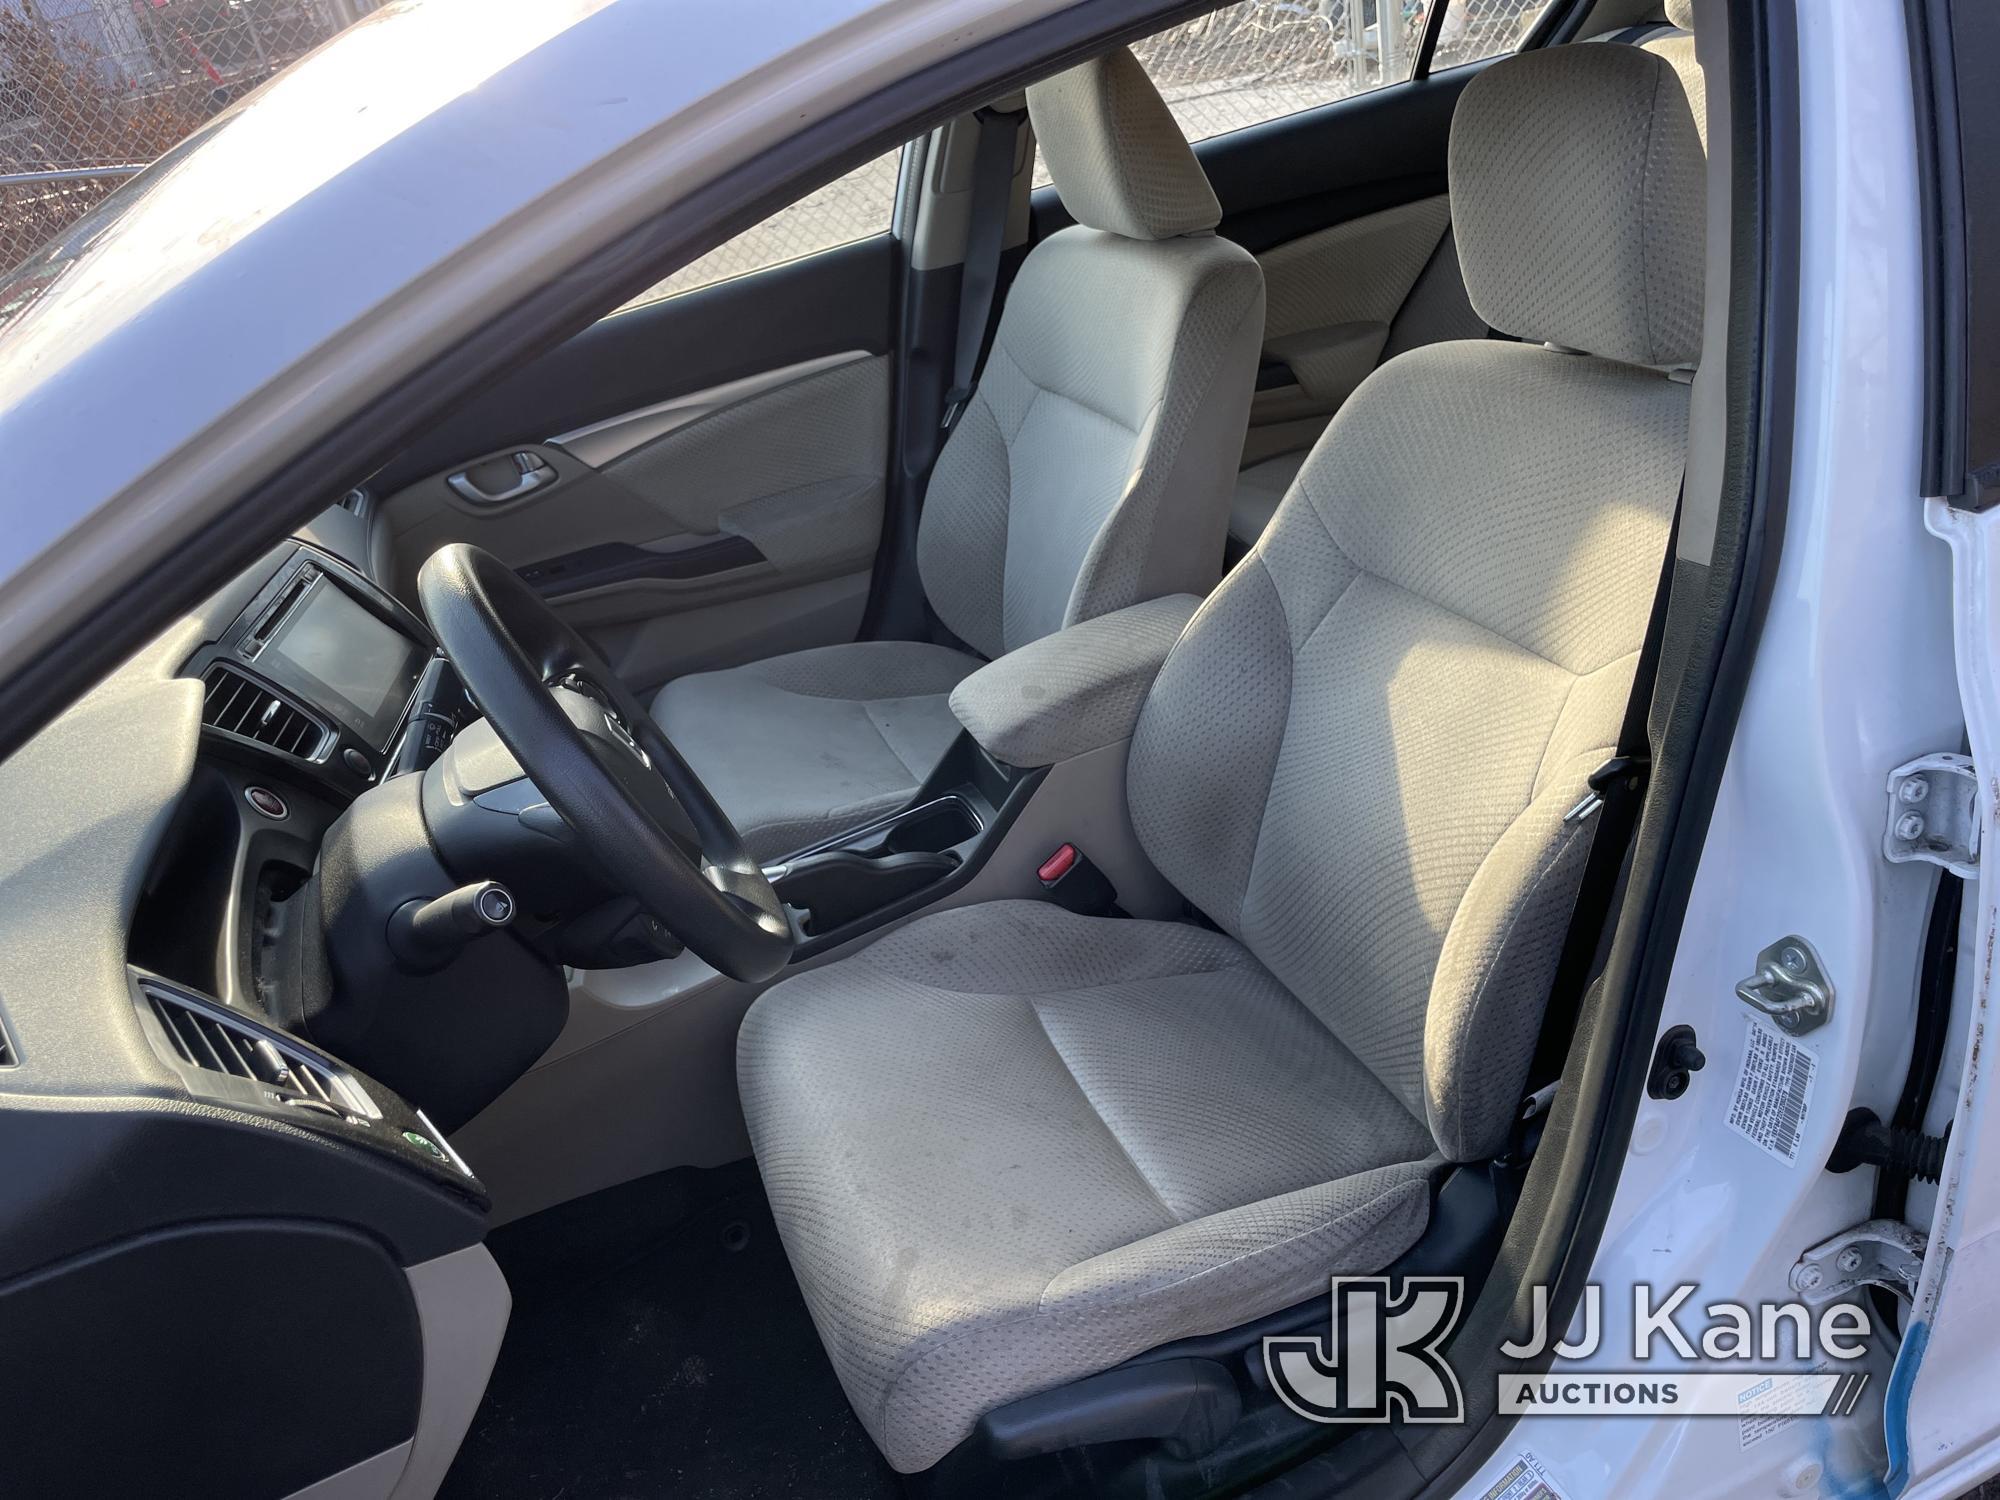 (Plymouth Meeting, PA) 2014 Honda Civic Hybrid 4-Door Sedan Runs & Moves, Body & Rust Damage